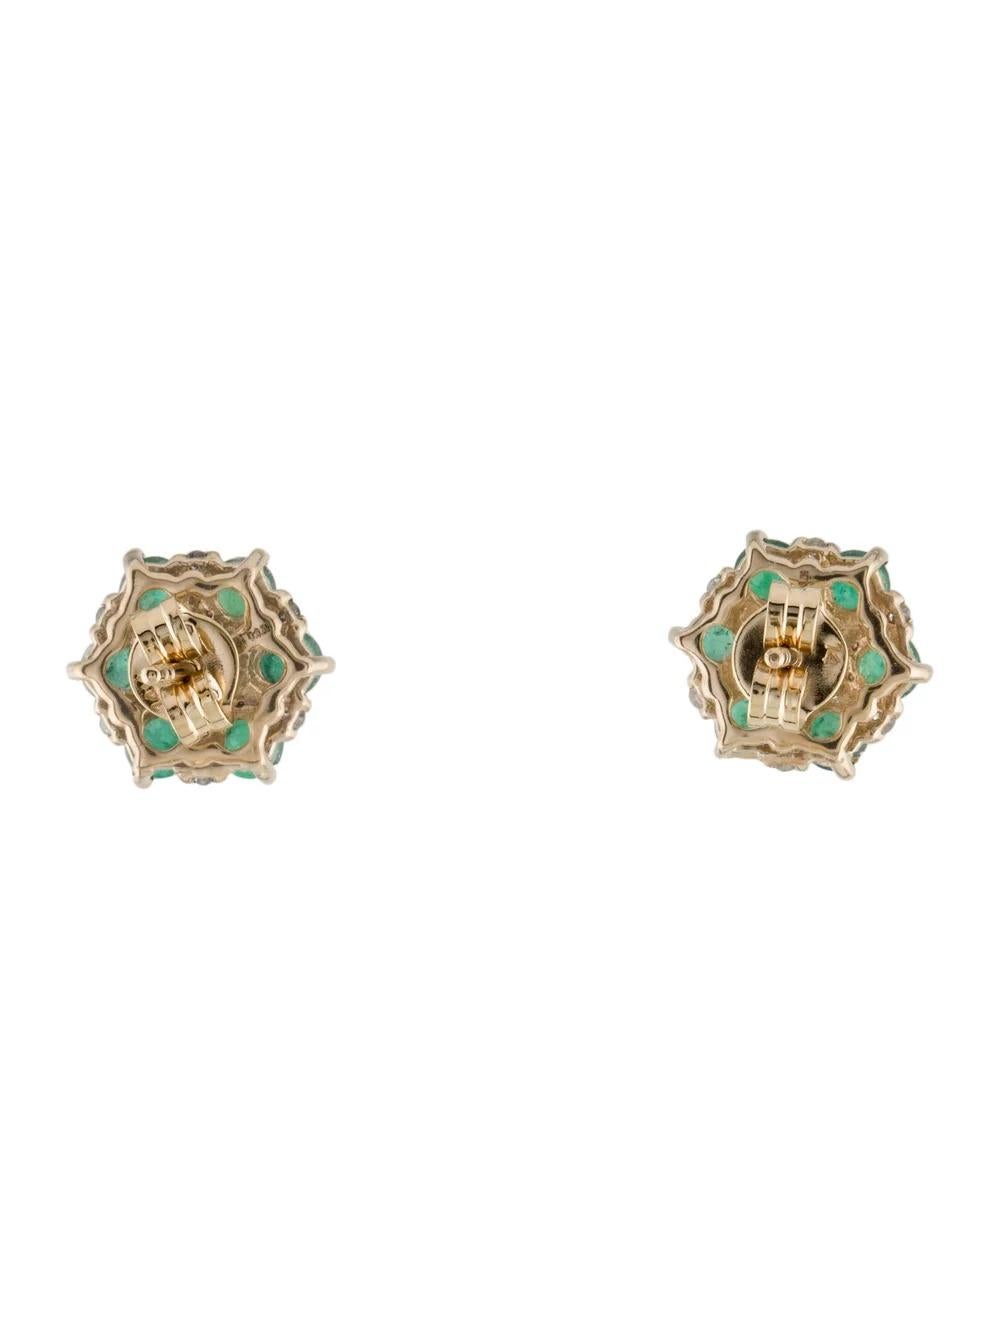 Round Cut 14K Emerald & Diamond Stud Earrings, 1.96ctw - Classic Design, Green Gemstones For Sale